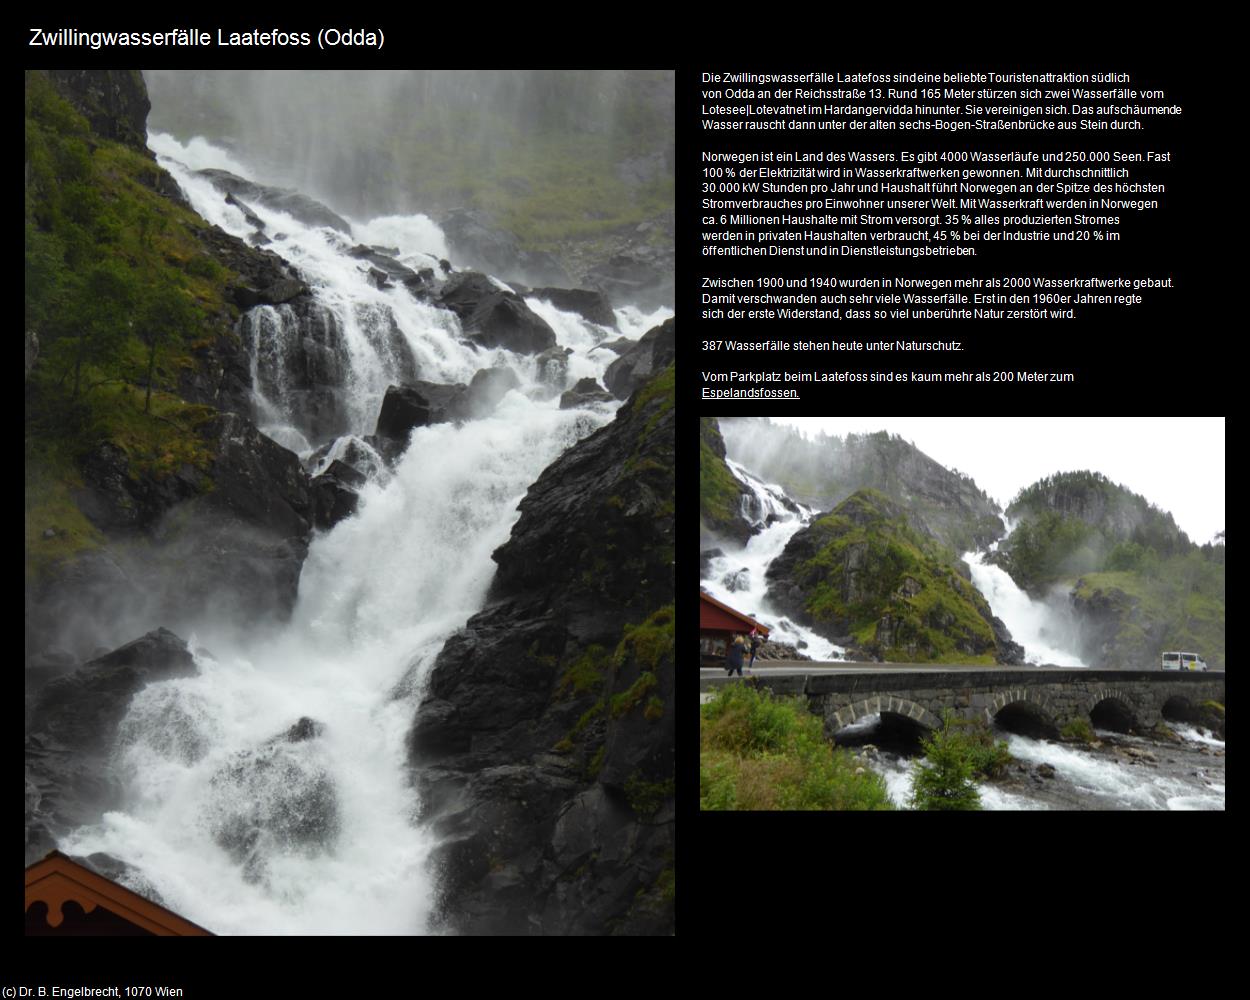 Zwillingwasserfälle Laatefoss (Odda) in Kulturatlas-REISE nach NORWEGEN(c)B.Engelbrecht